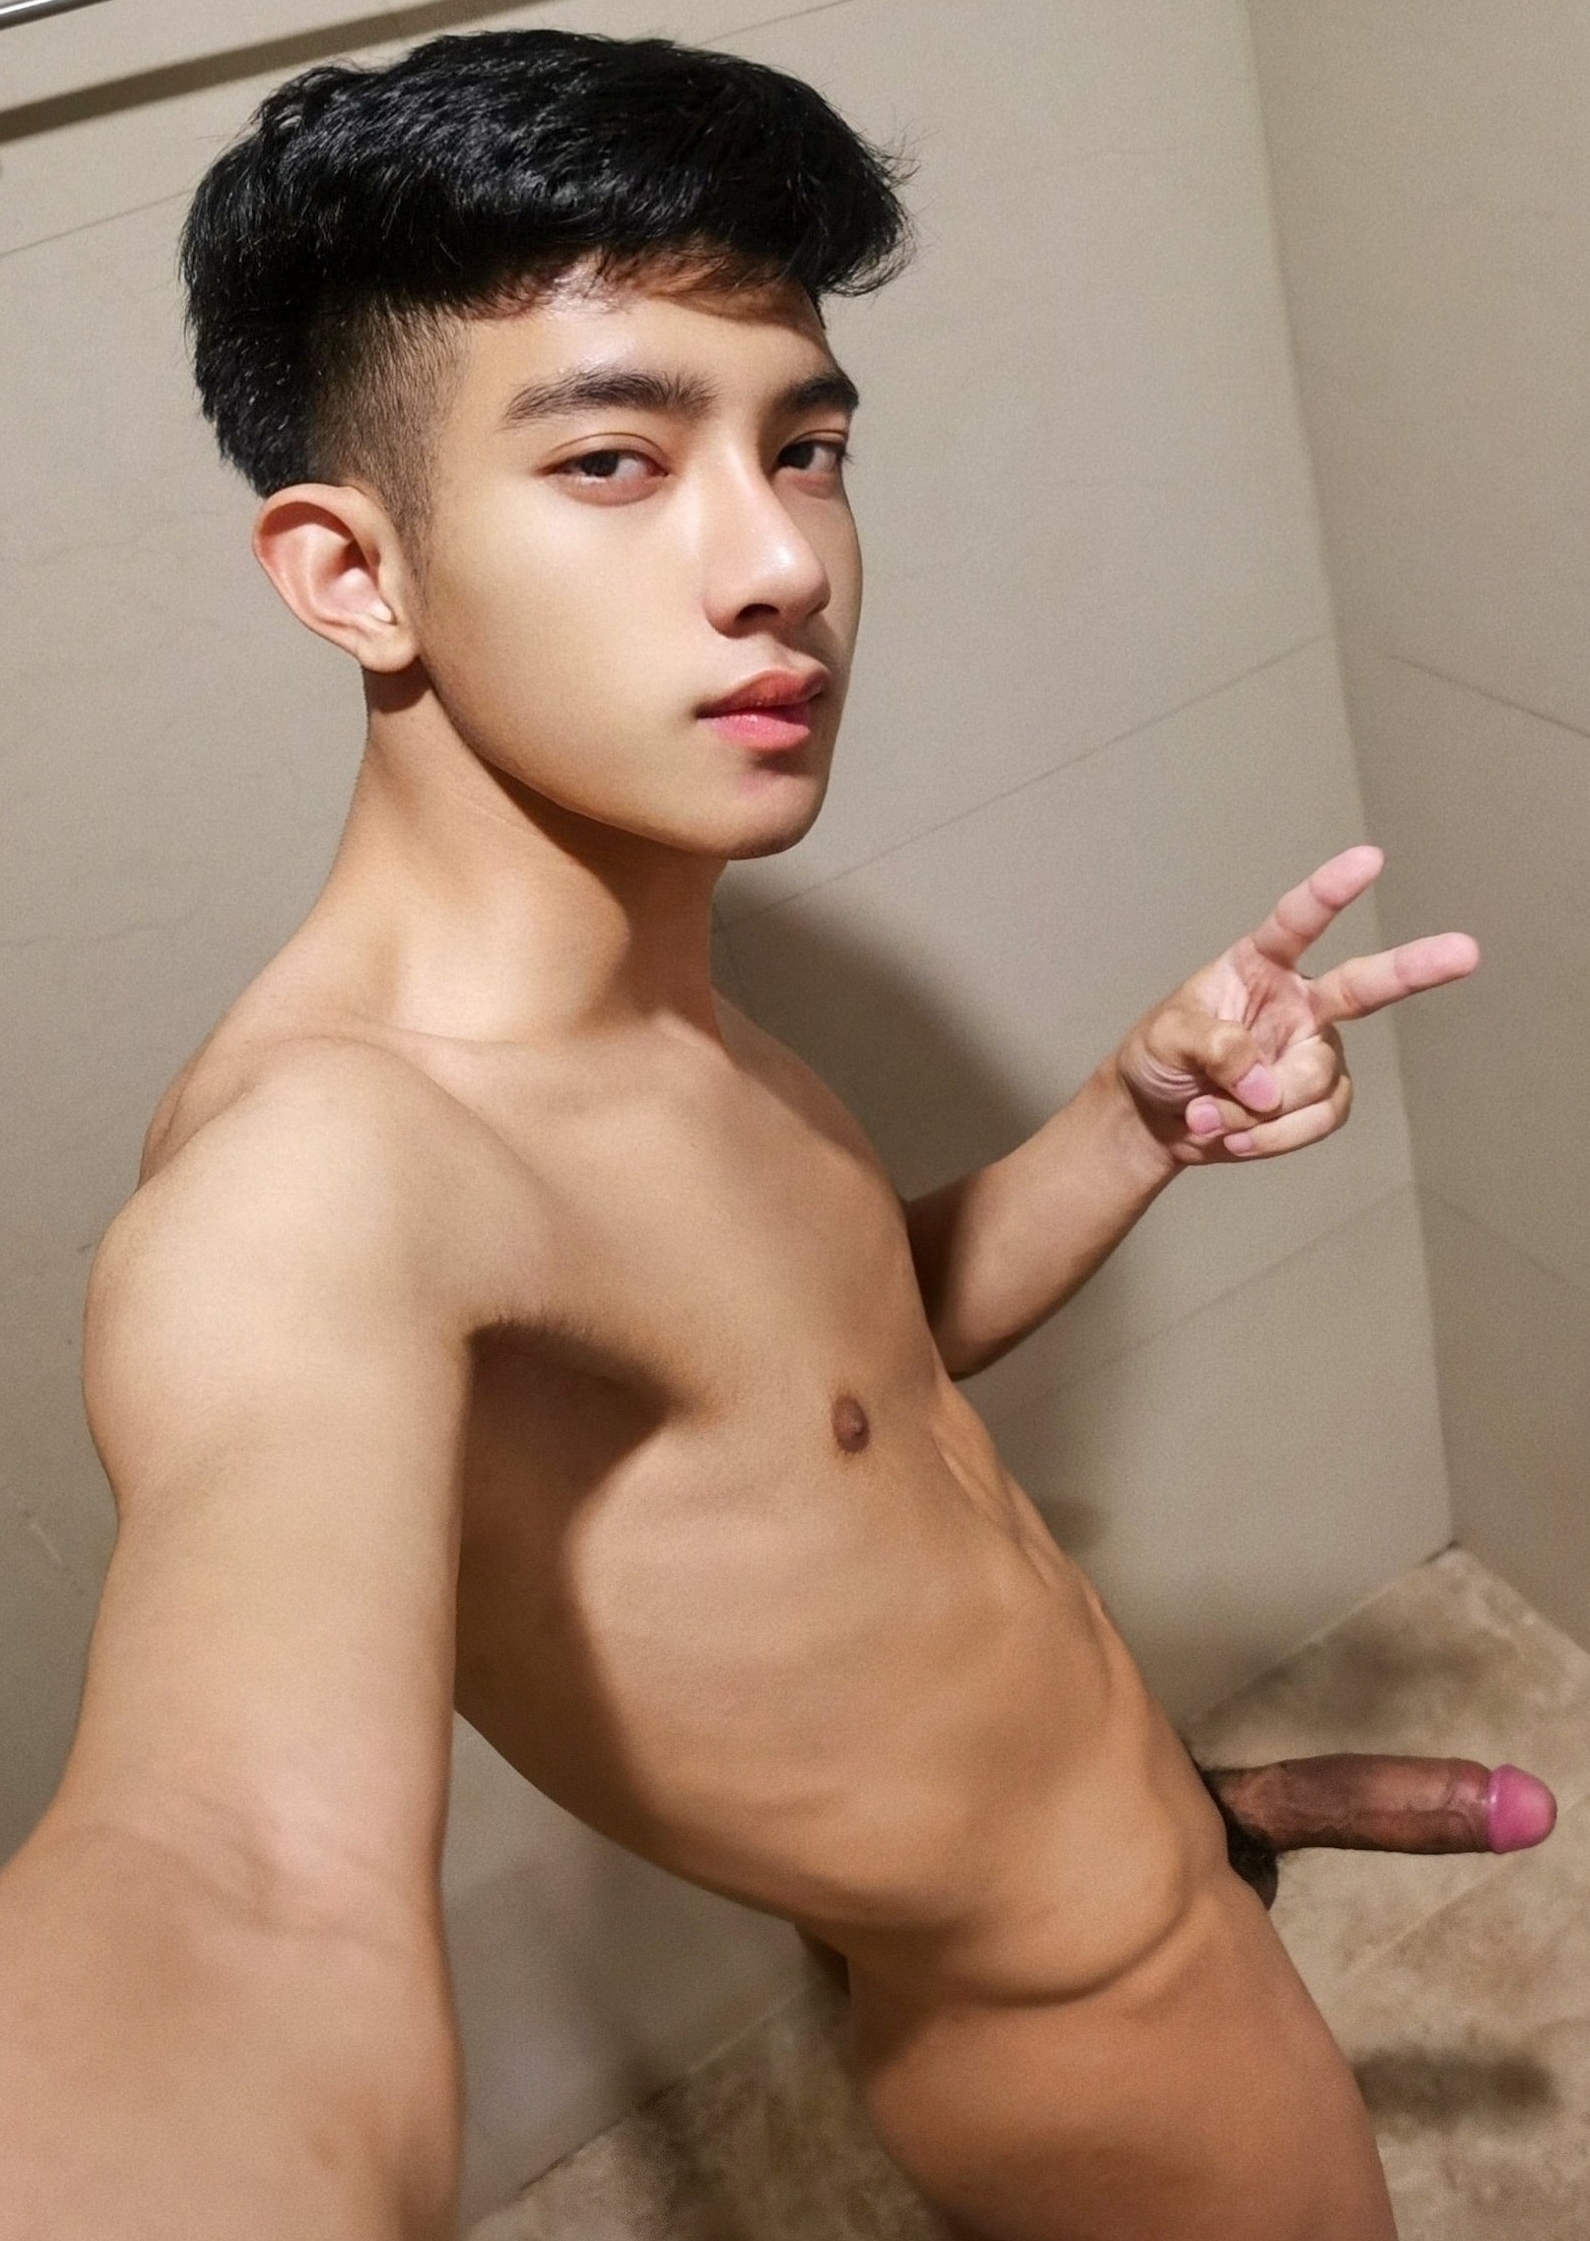 Asian boy with a boner